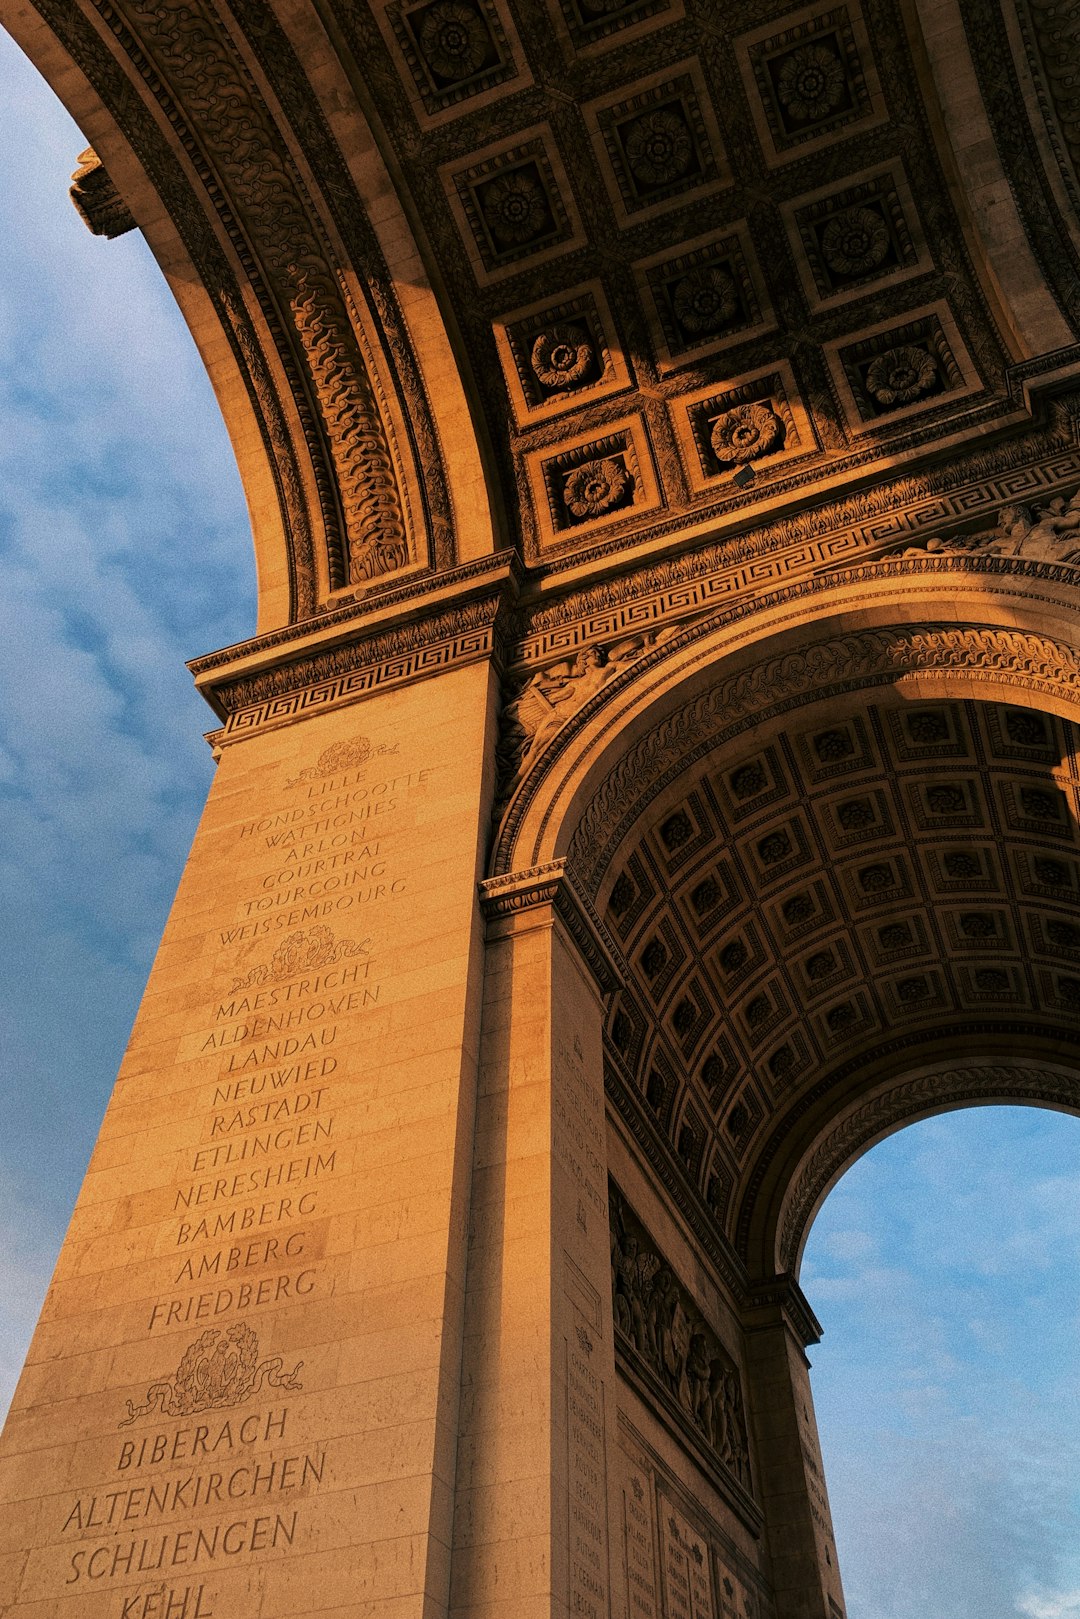 Landmark photo spot Charles de Gaulle – Étoile Passerelle Debilly